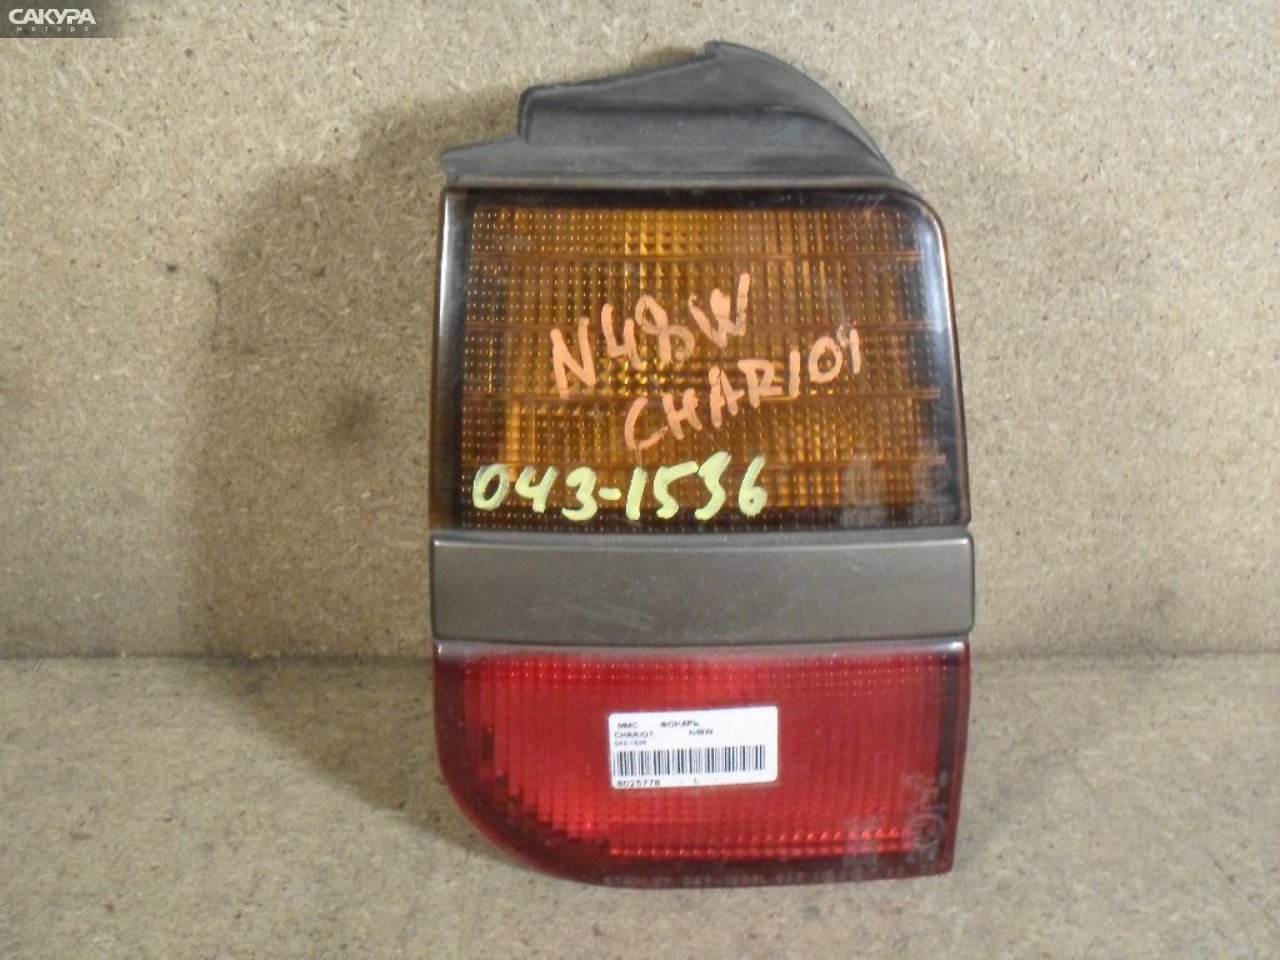 Фонарь стоп-сигнала левый Mitsubishi Chariot N48W 043-1536: купить в Сакура Абакан.